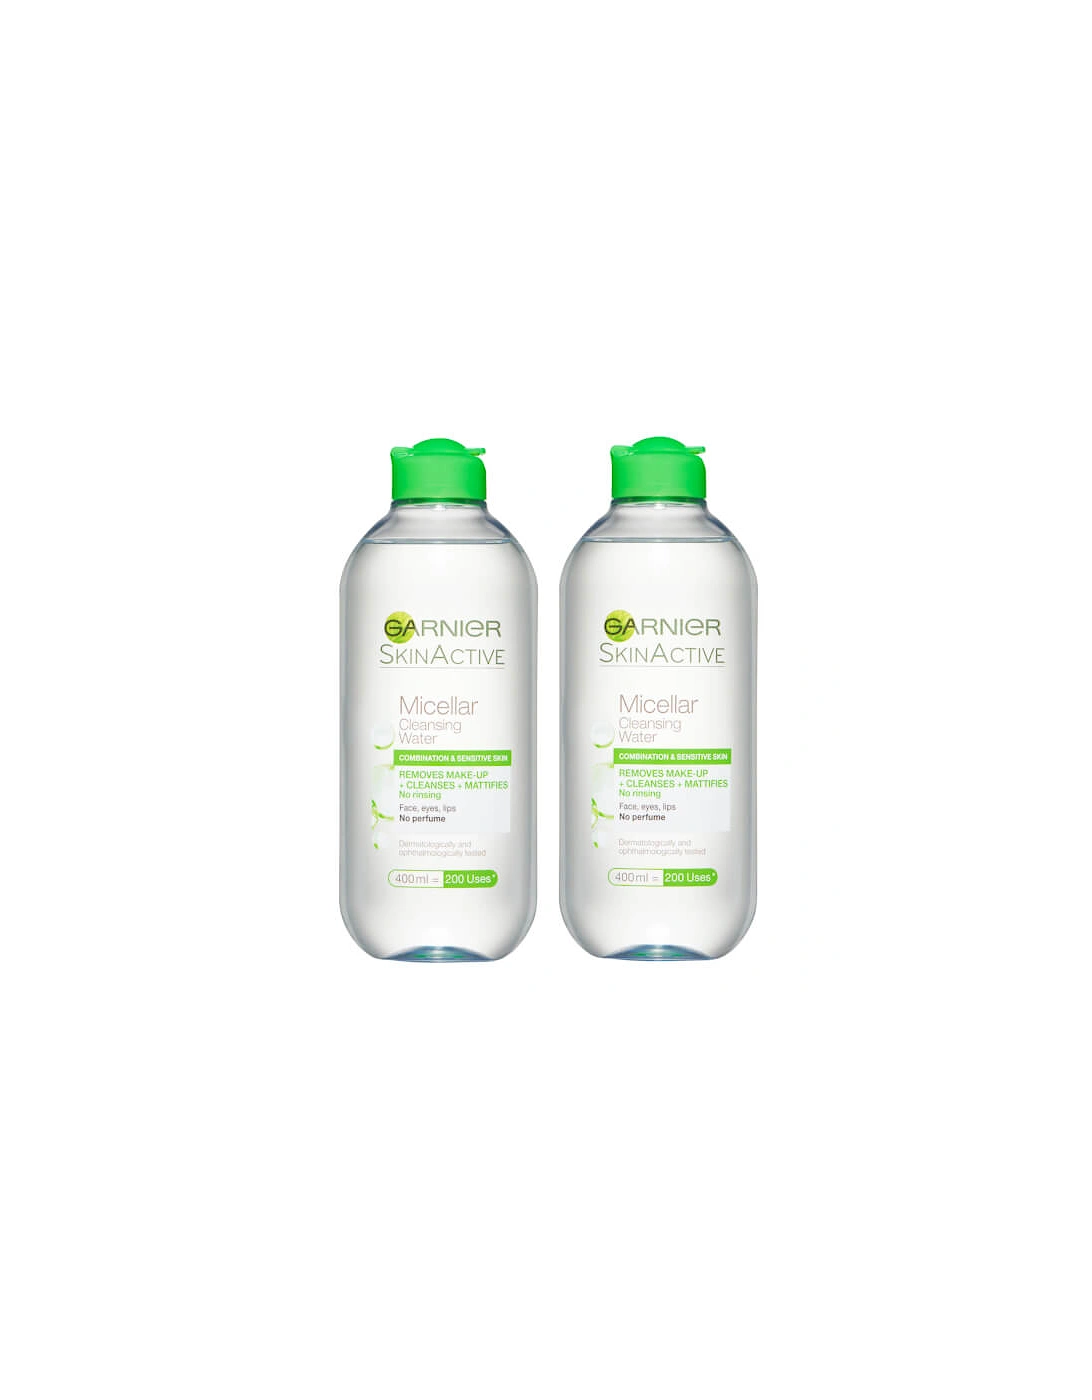 Micellar Water Facial Cleanser Combination Skin 400ml Duo Pack - Garnier, 2 of 1